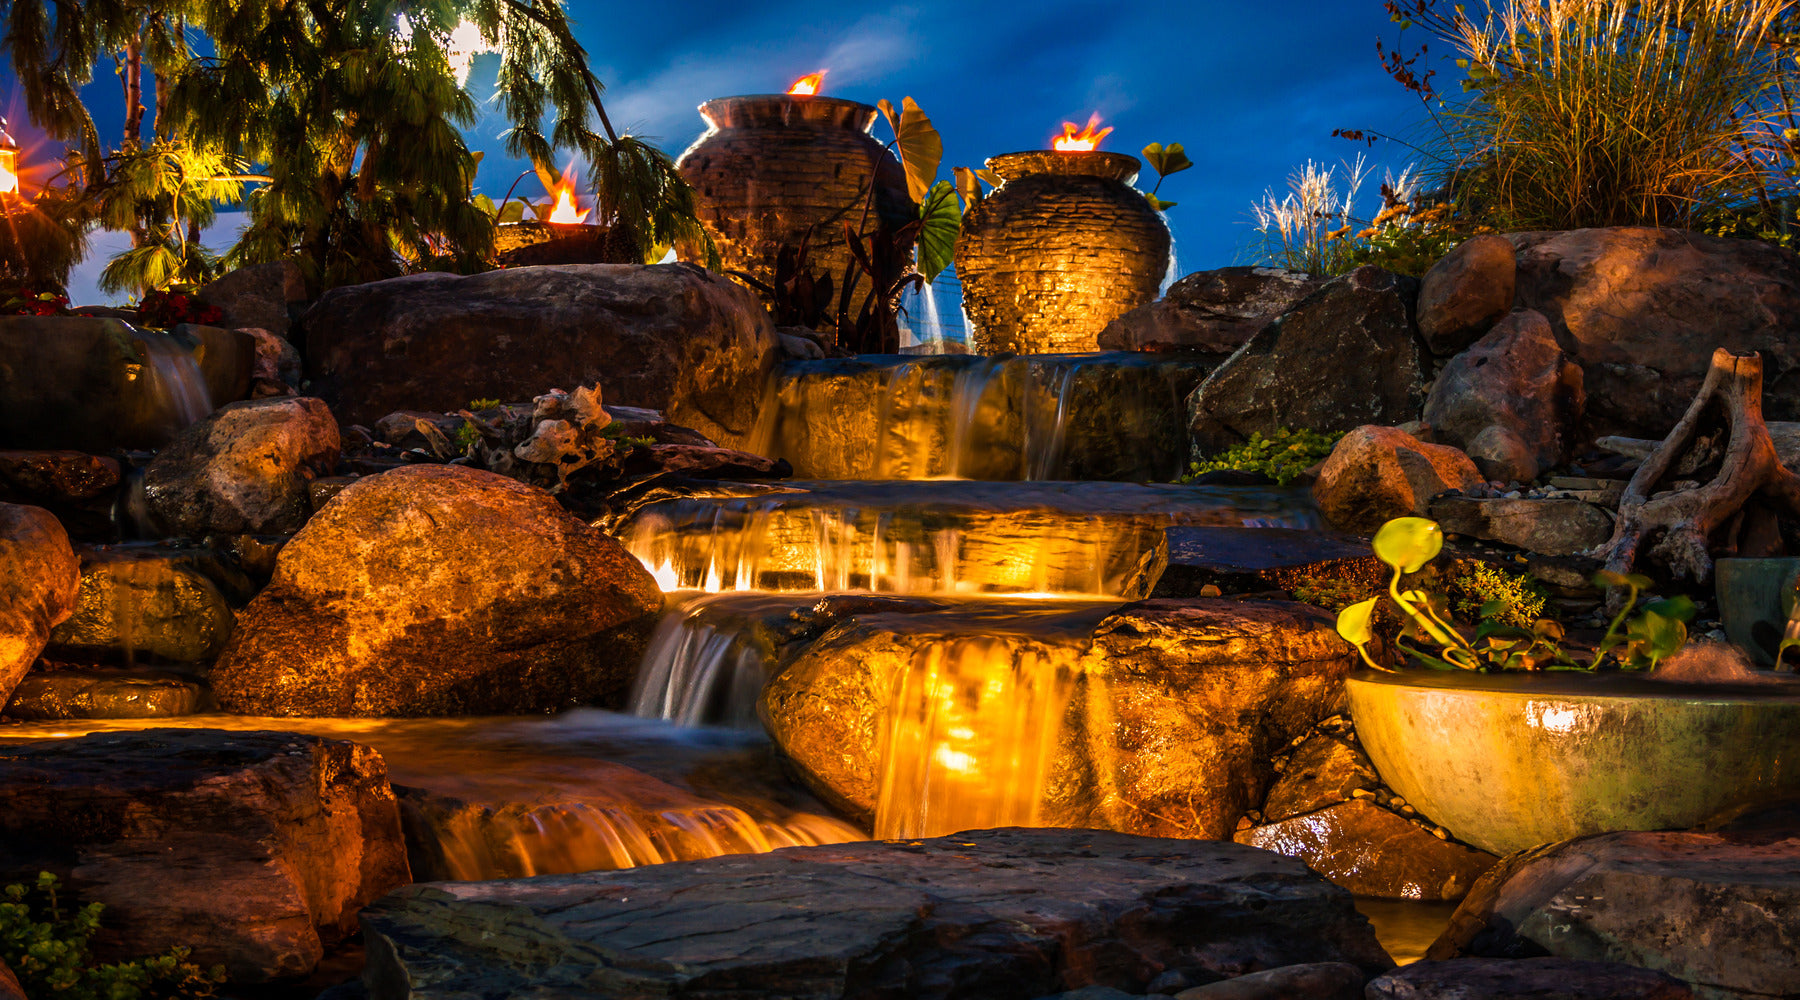 Lanscape lighting shown illuminating waterfall fountain at night